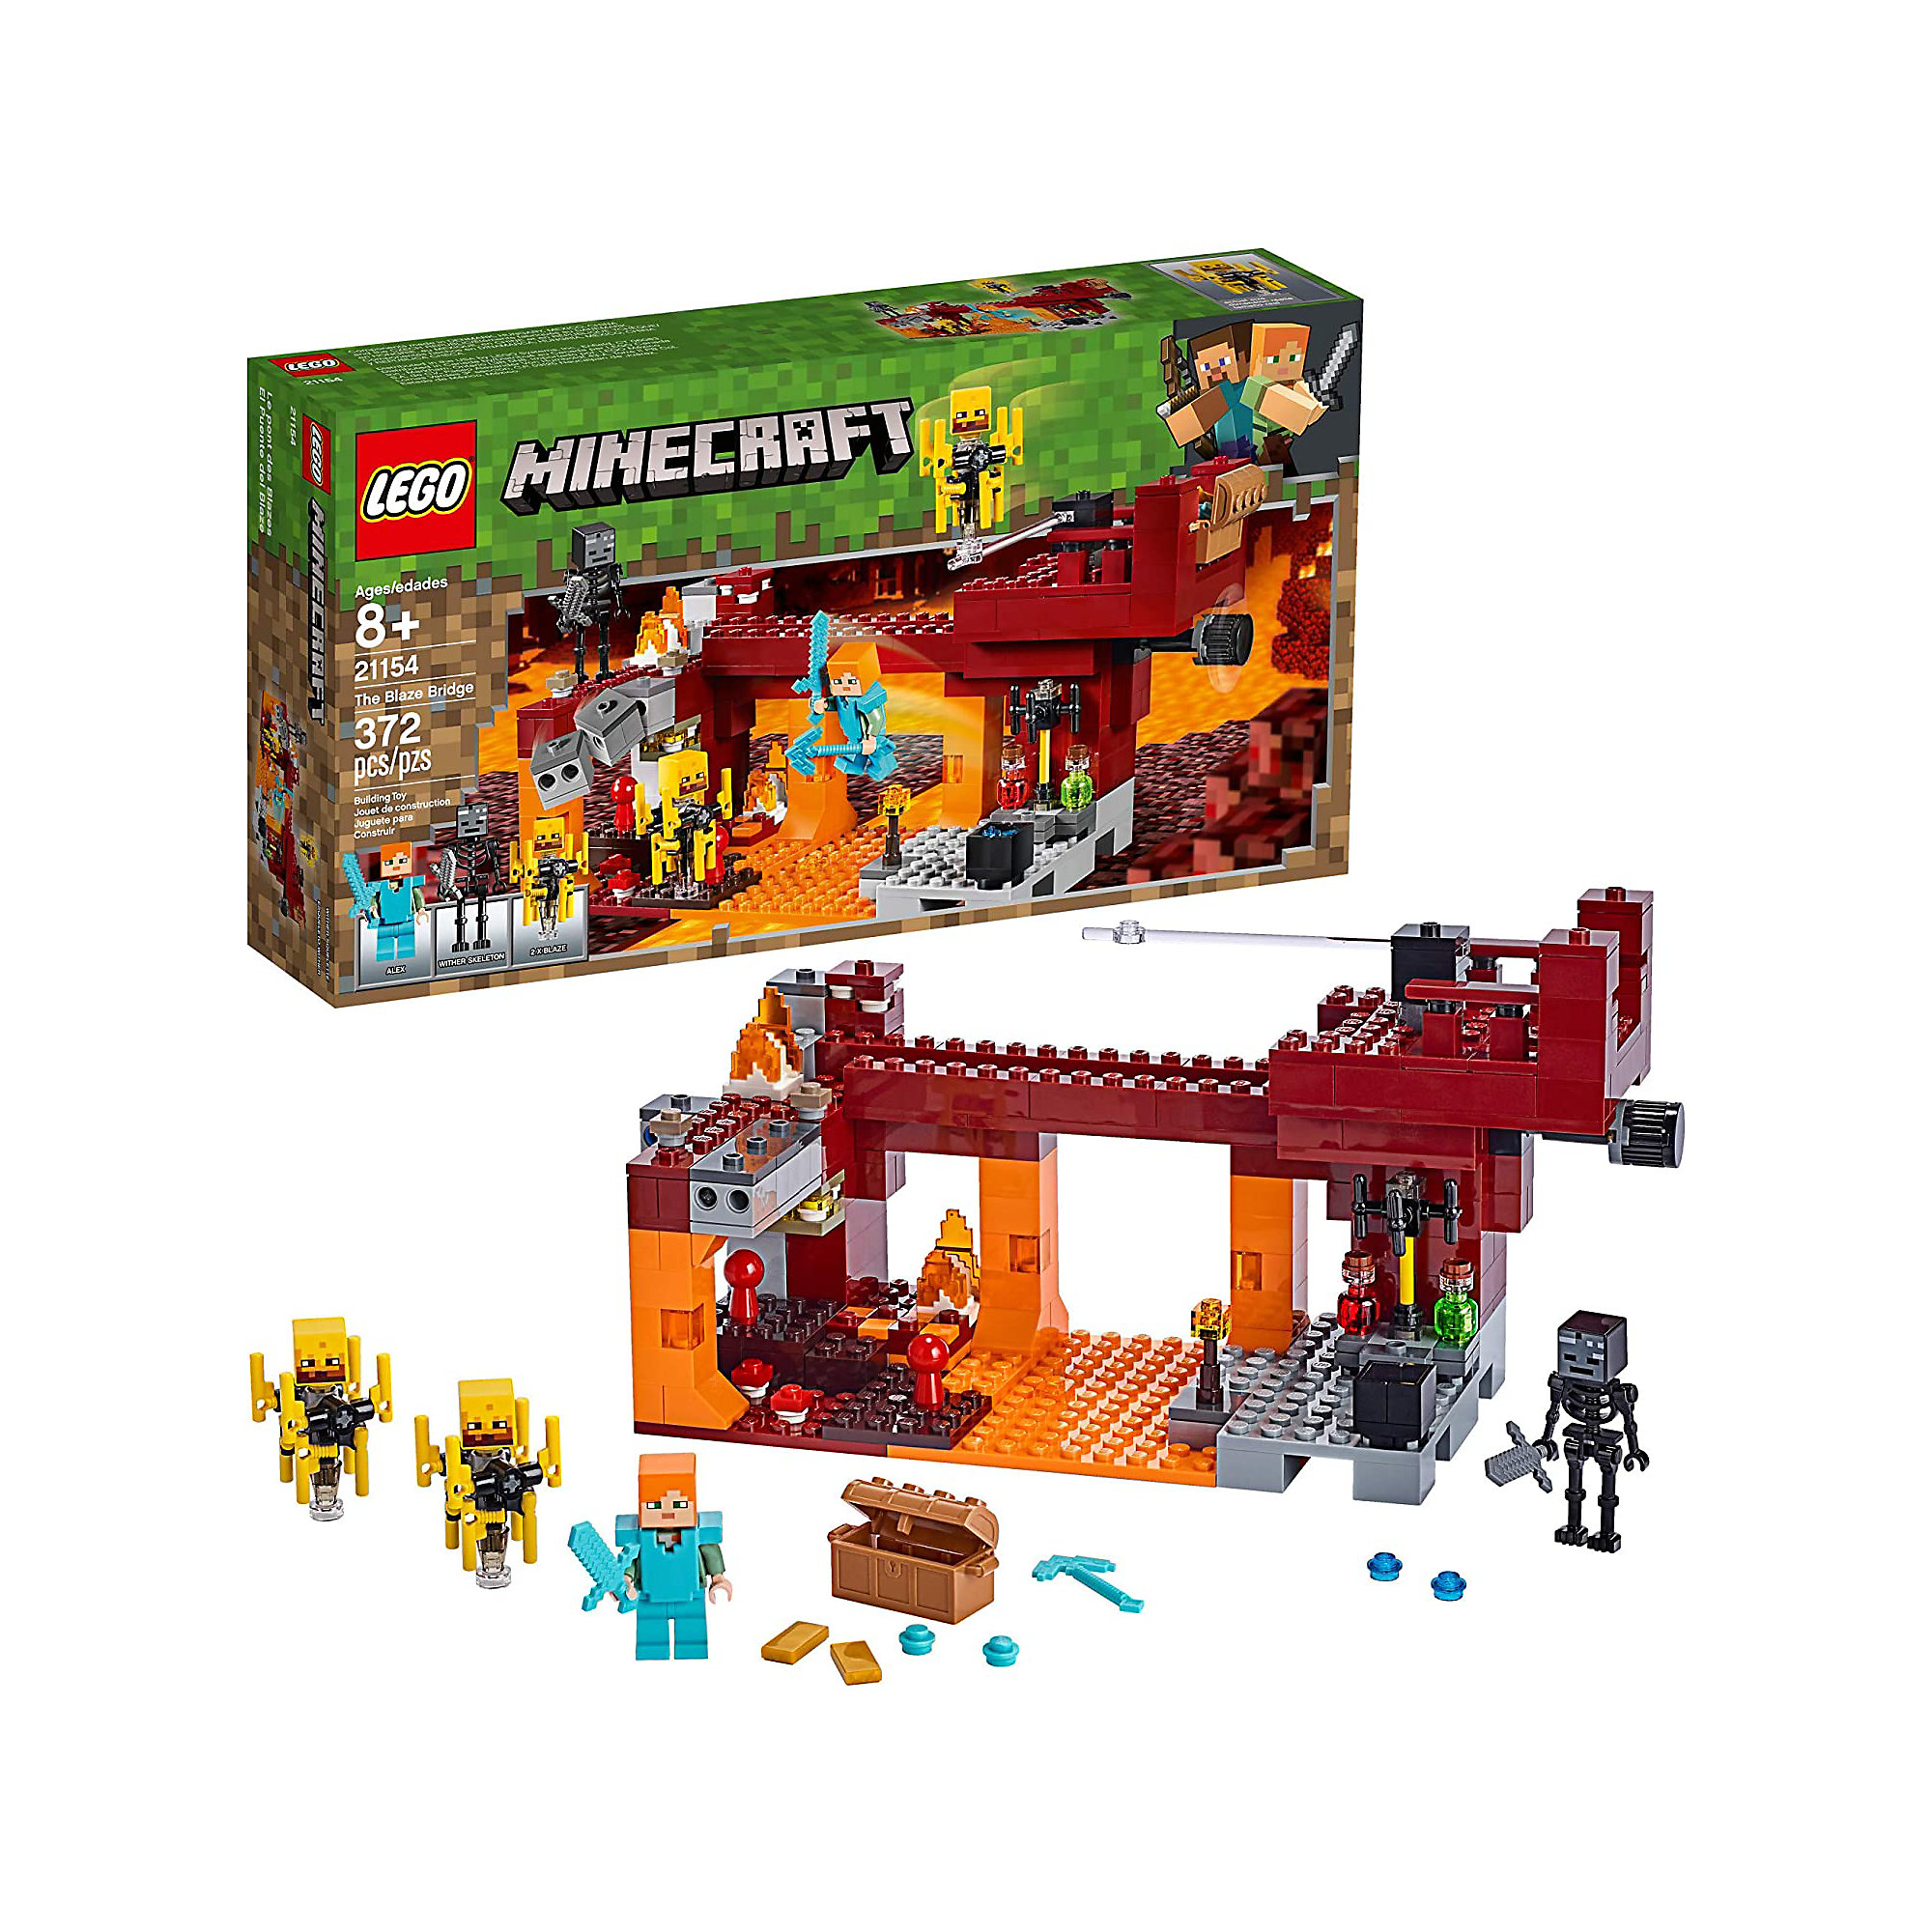 LEGO Minecraft: The Blaze Bridge Building Set (21154)